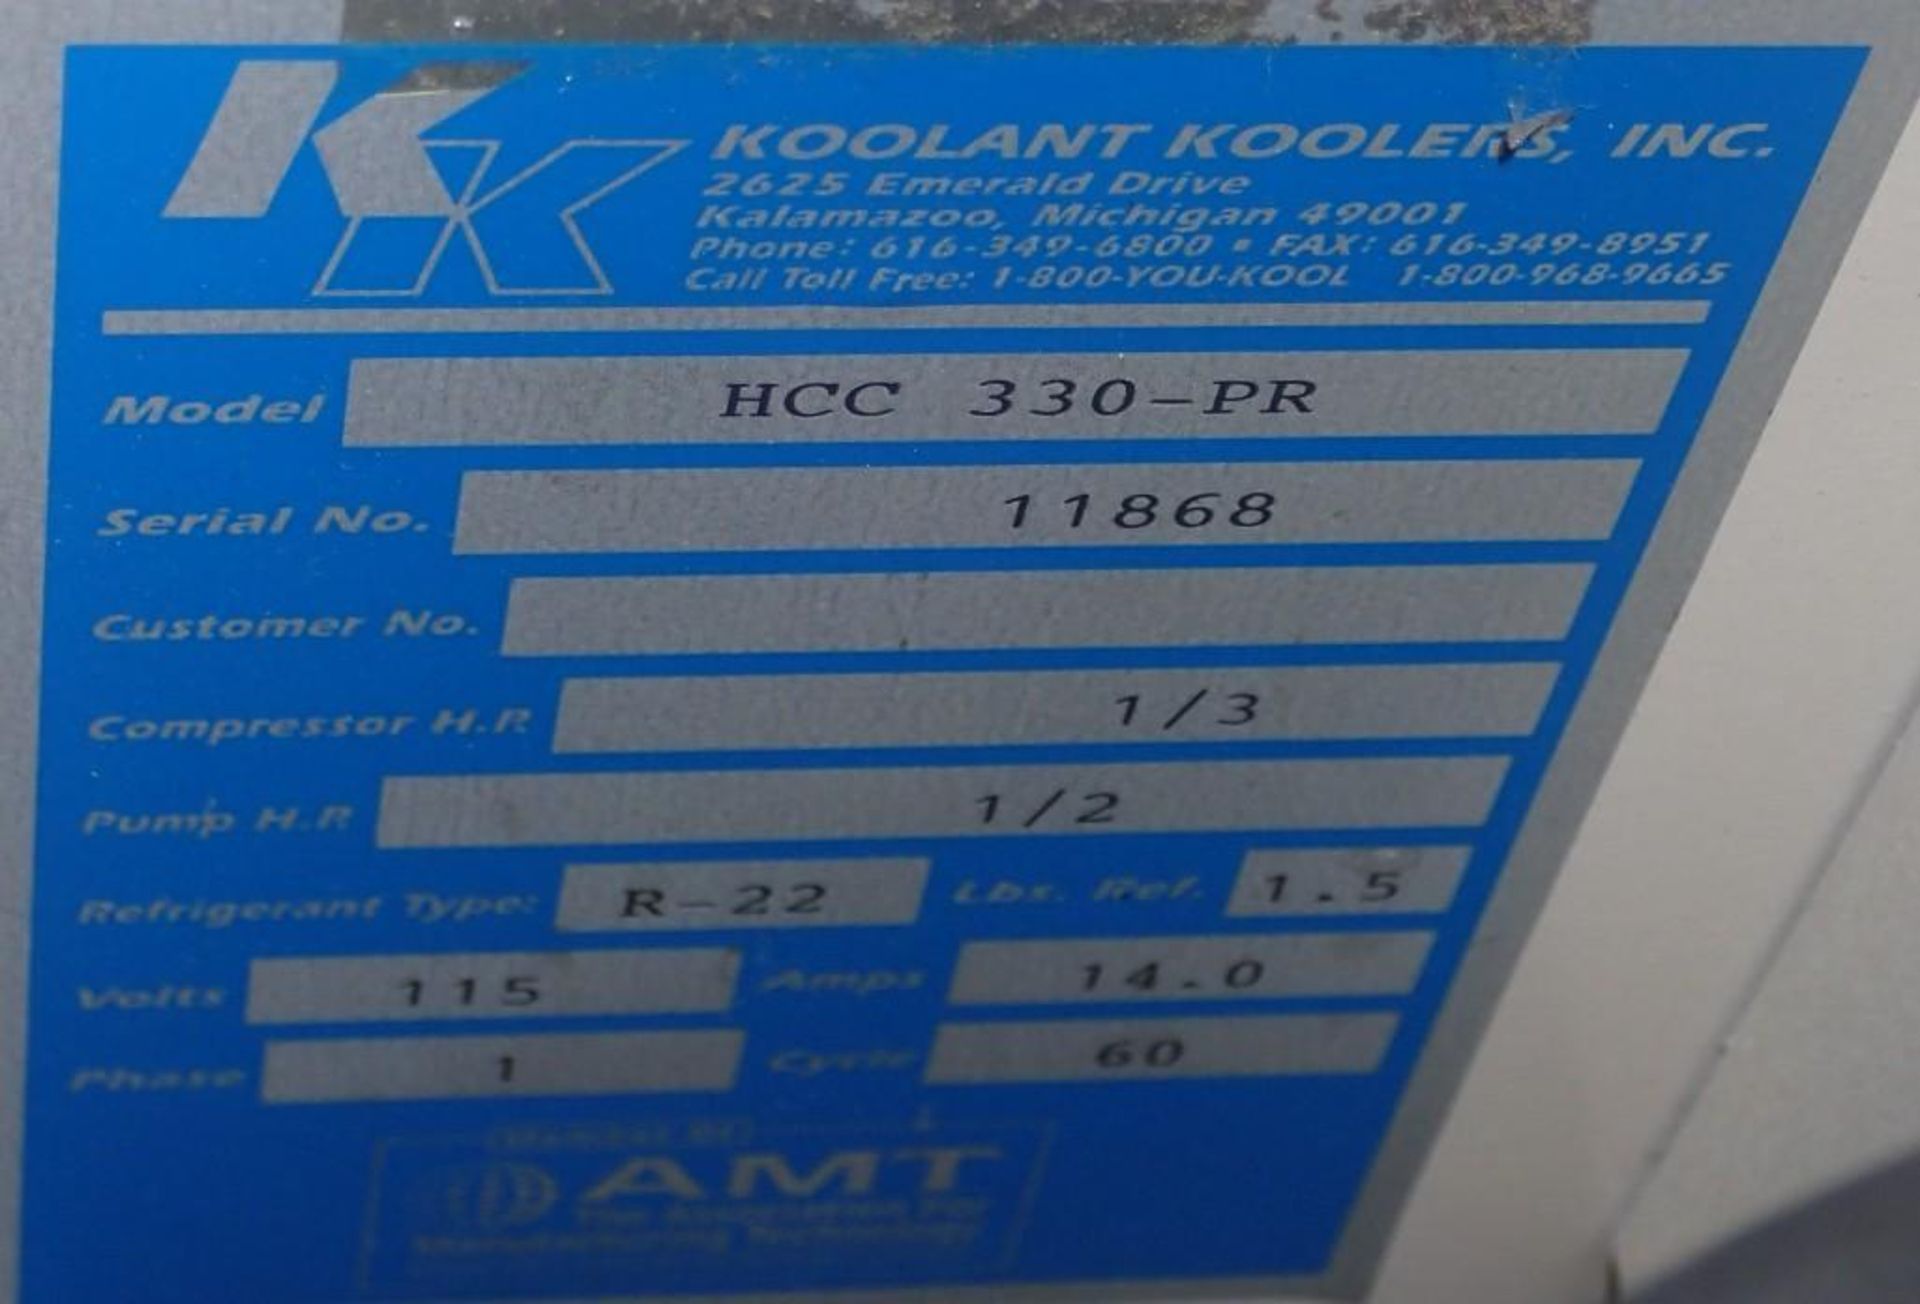 Koolant Koolers #Hcc 330-PR Chiller - Image 4 of 4